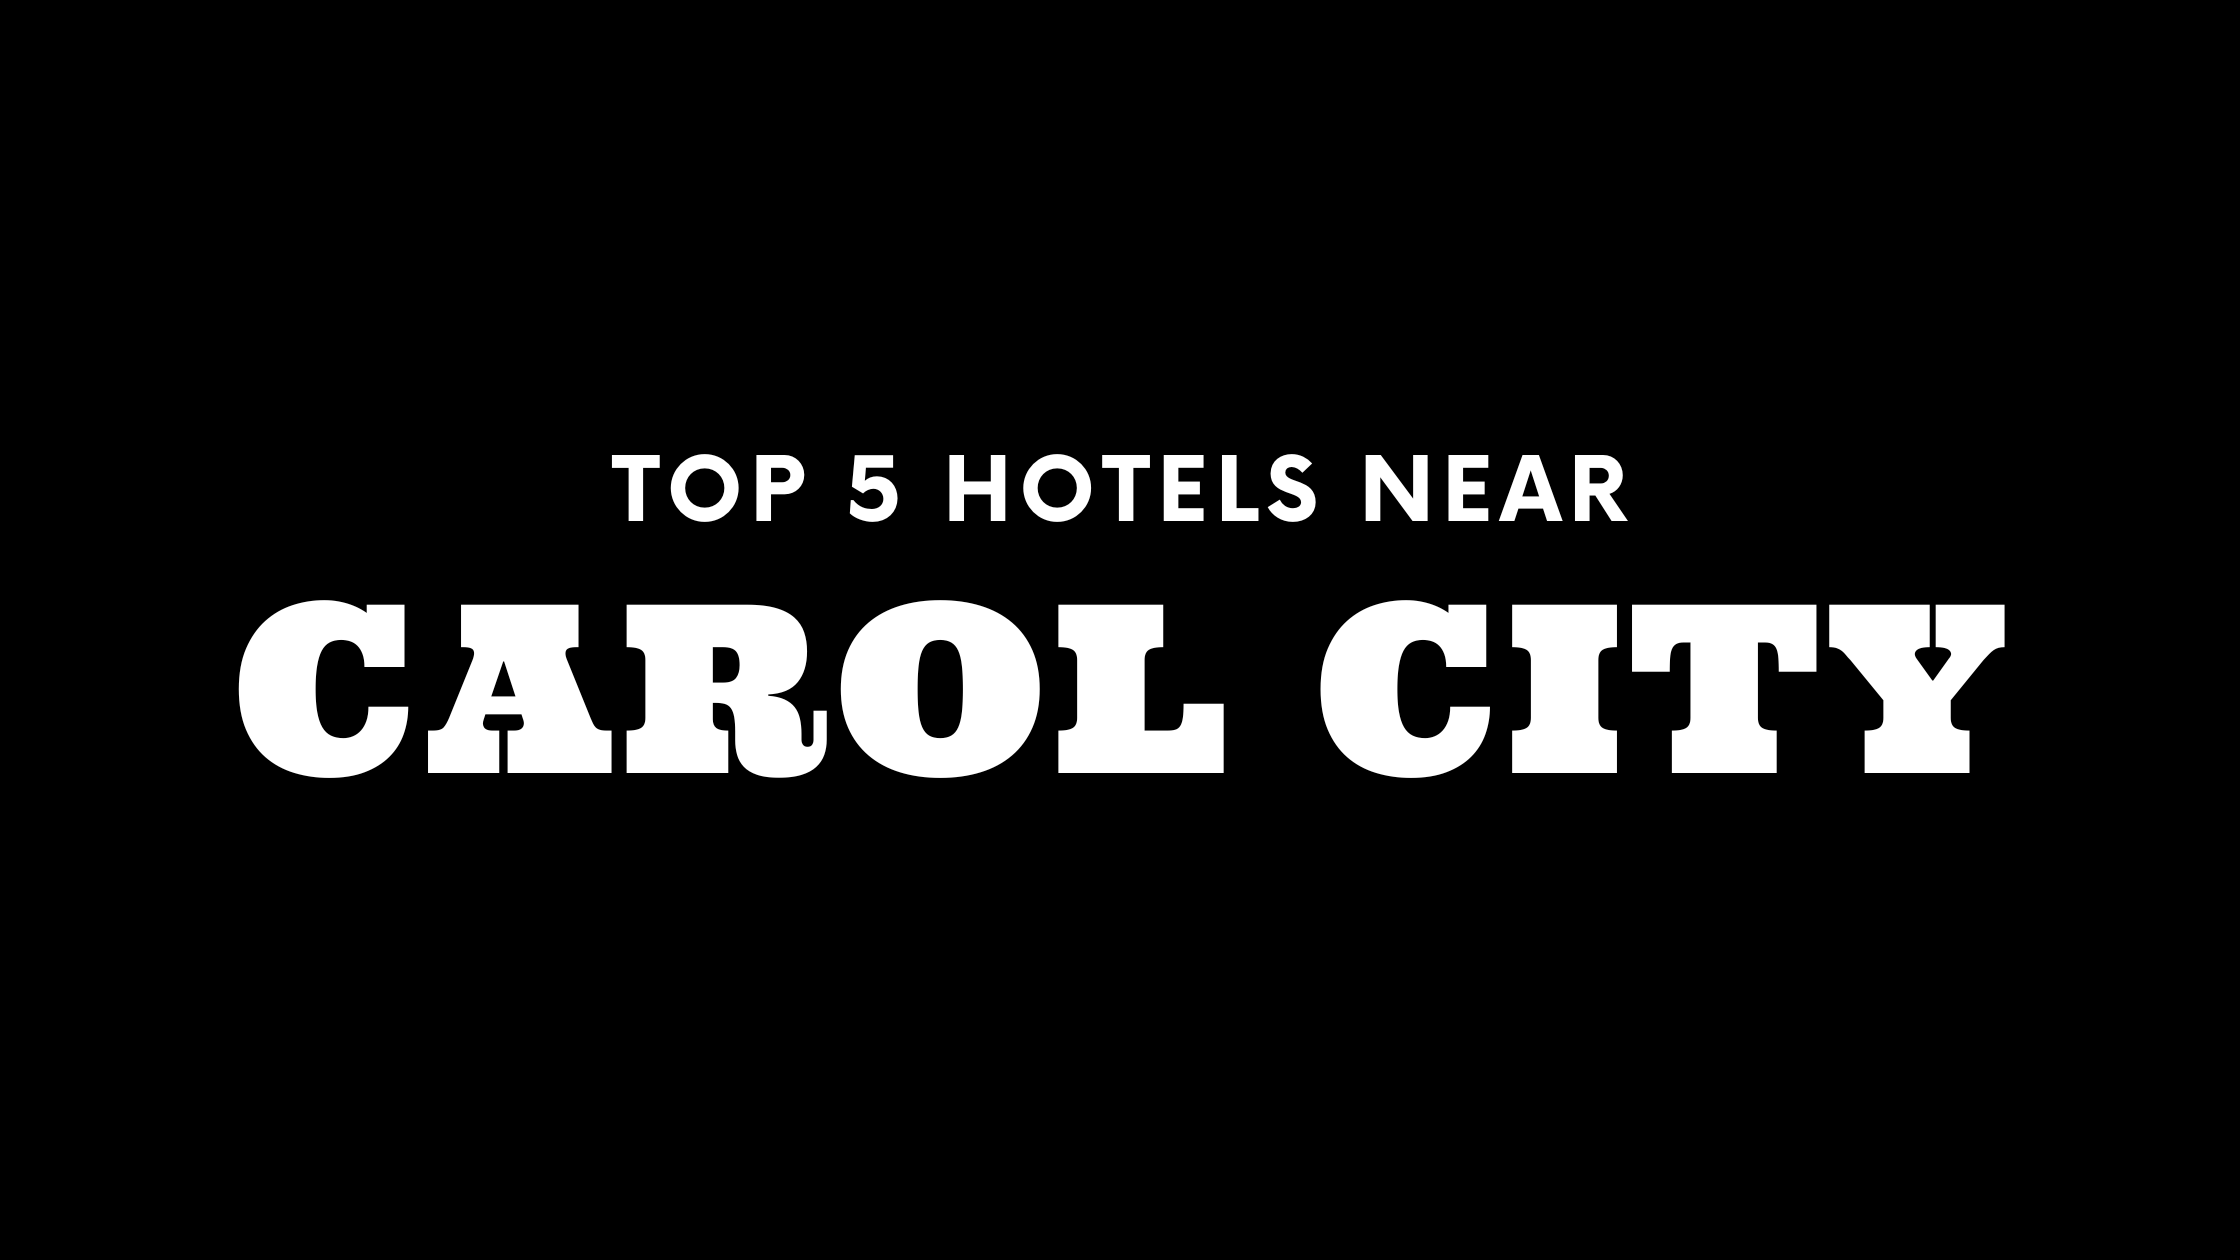 Top 5 Hotels near Carol City